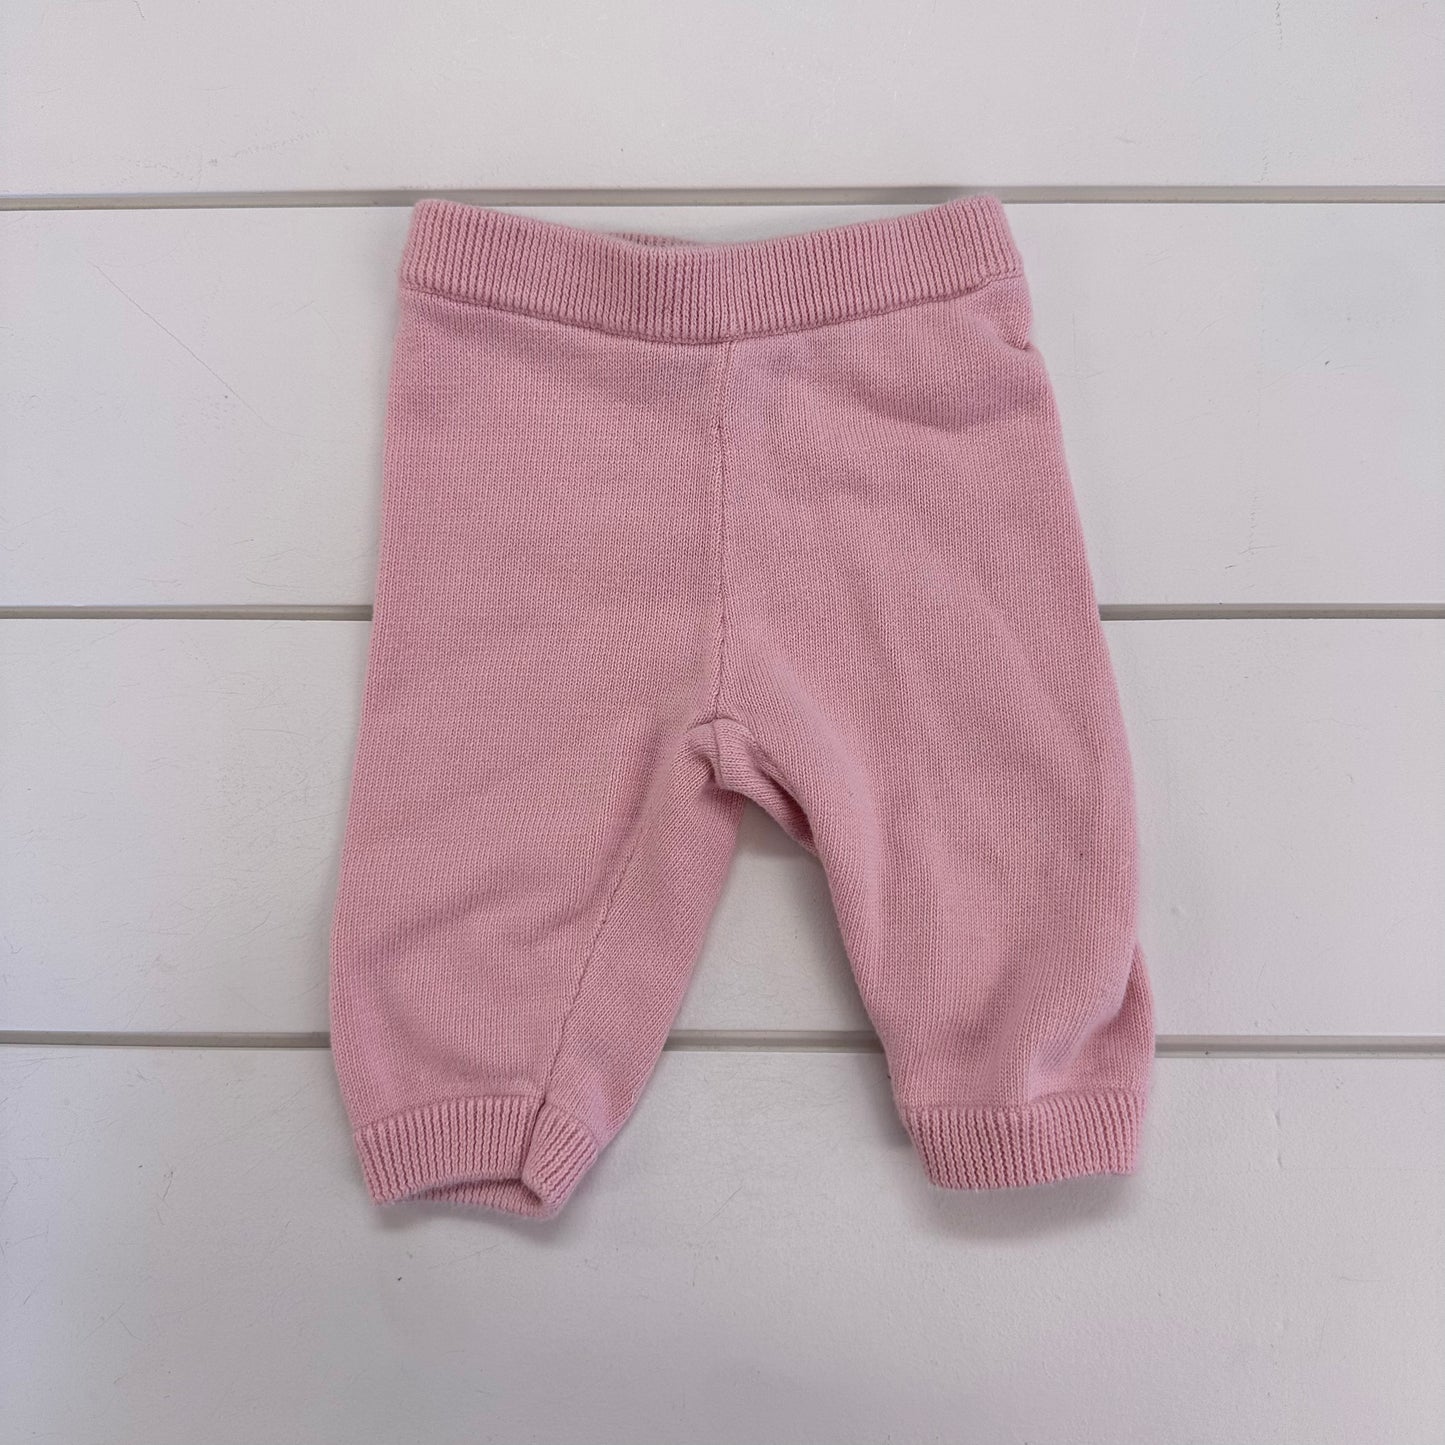 Tea Co. Size knit pants Newborn - Closet Sale